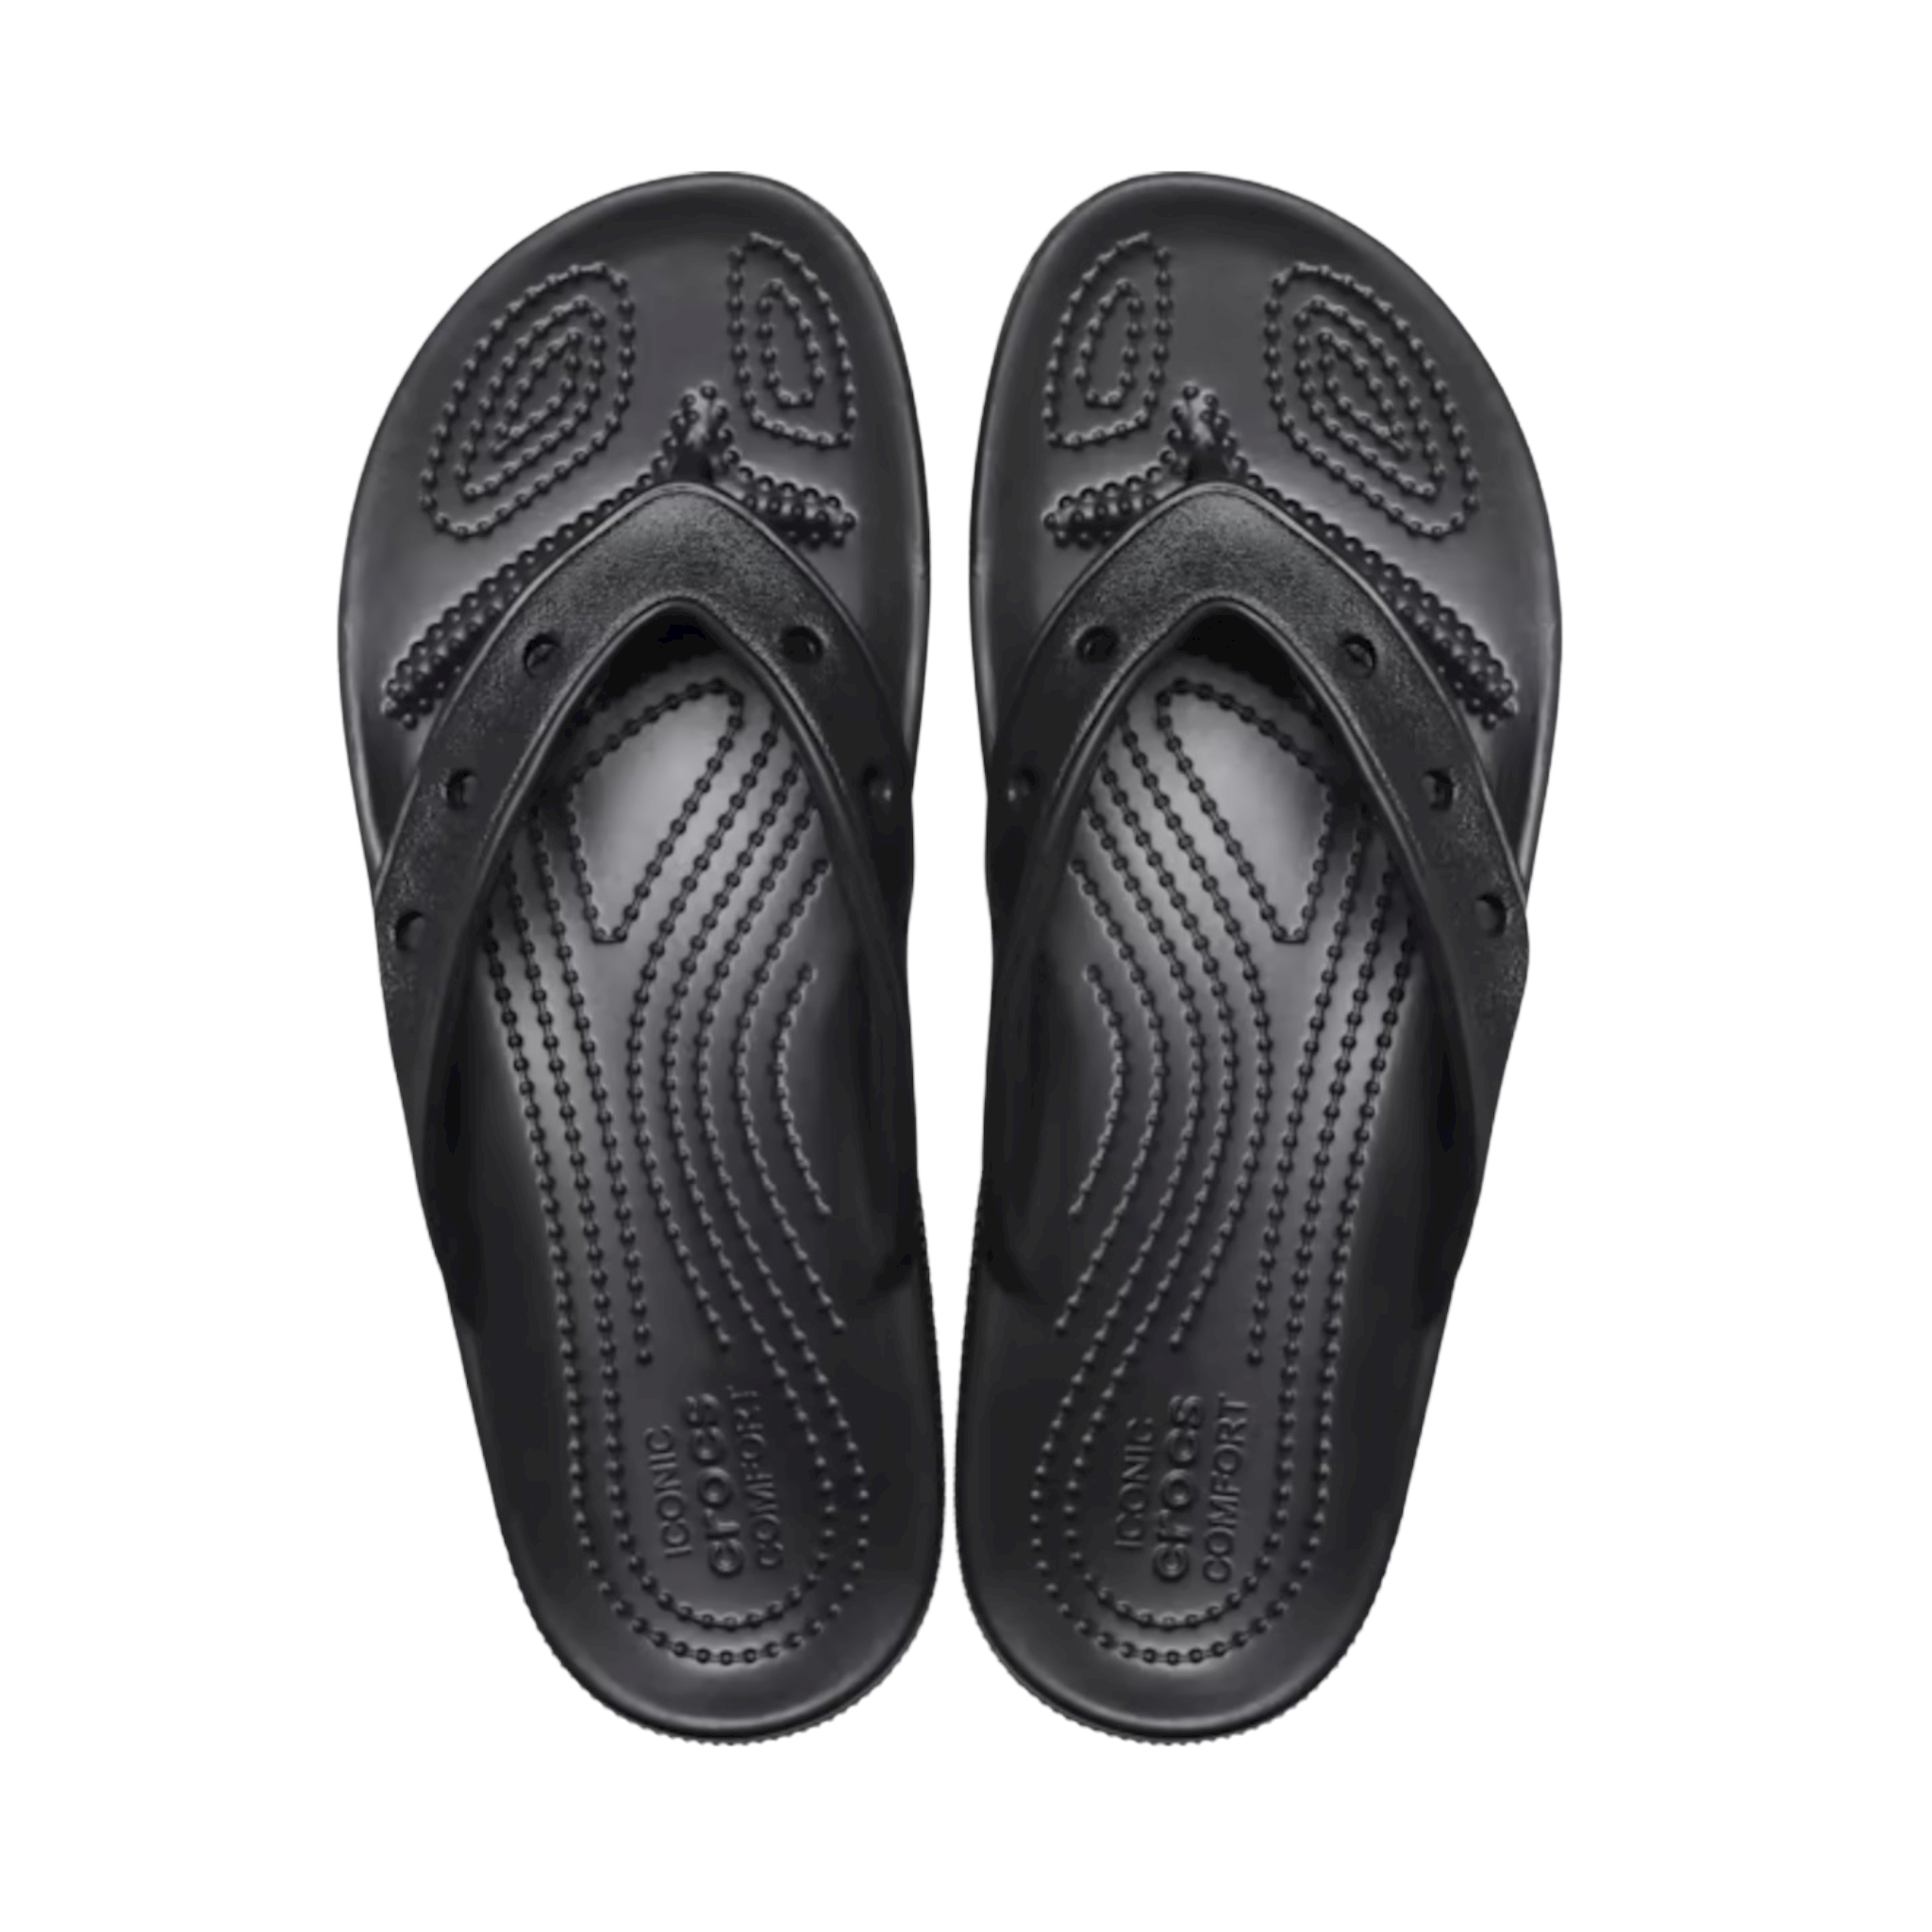 Classic Flip - shoe&amp;me - Crocs - Crocs - crocs, Jandals, Summer 22, Unisex